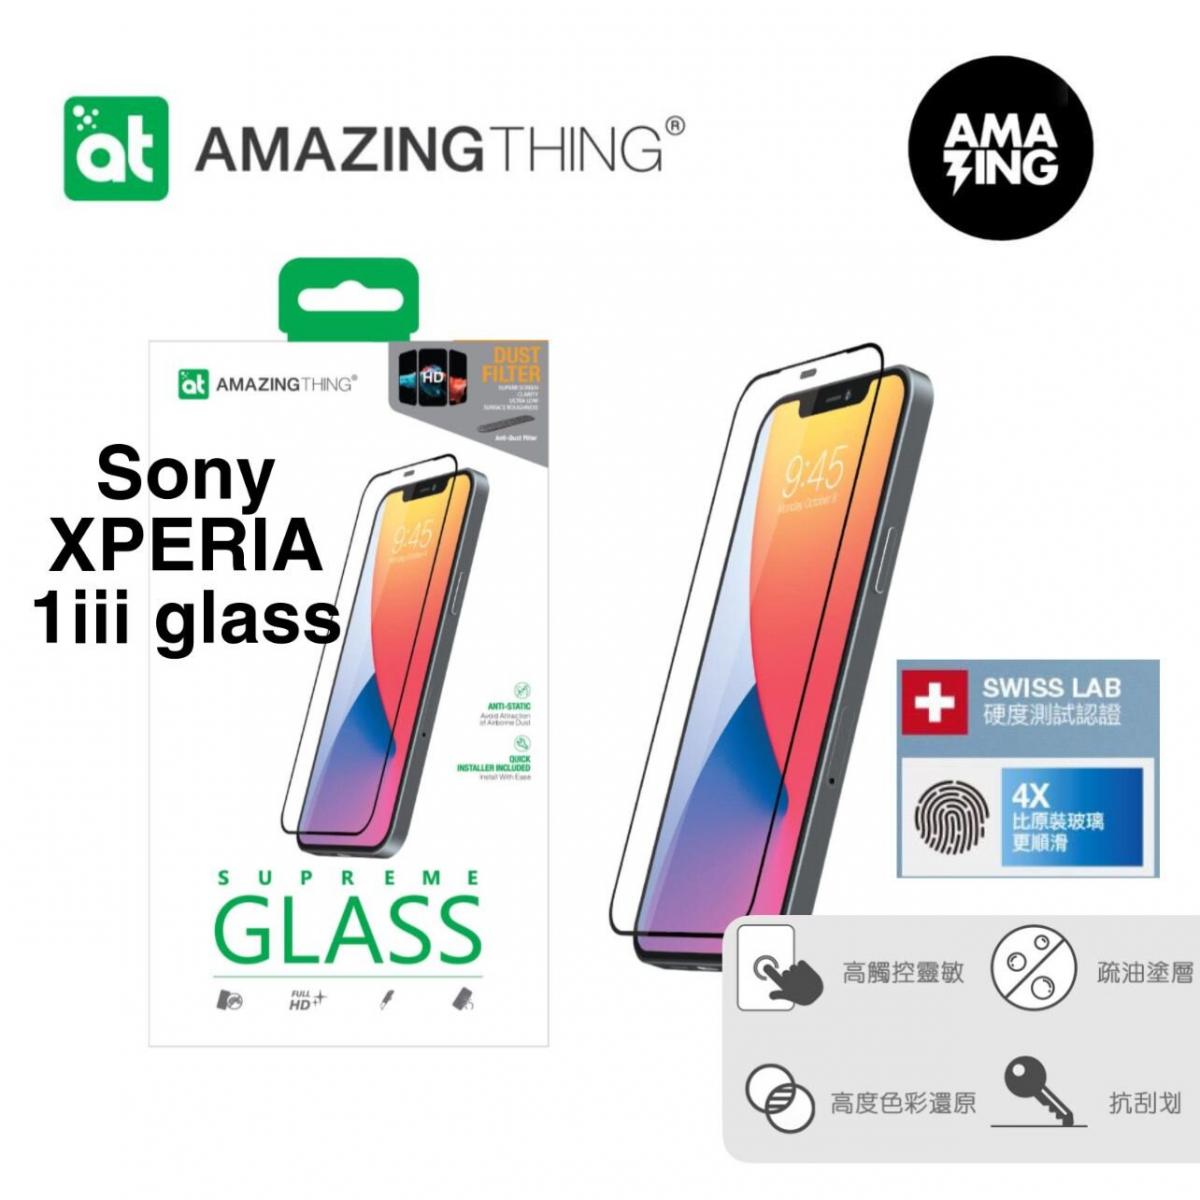 Sony Xperia 1 iii  SupremeGlass 強化全屏玻璃保護貼